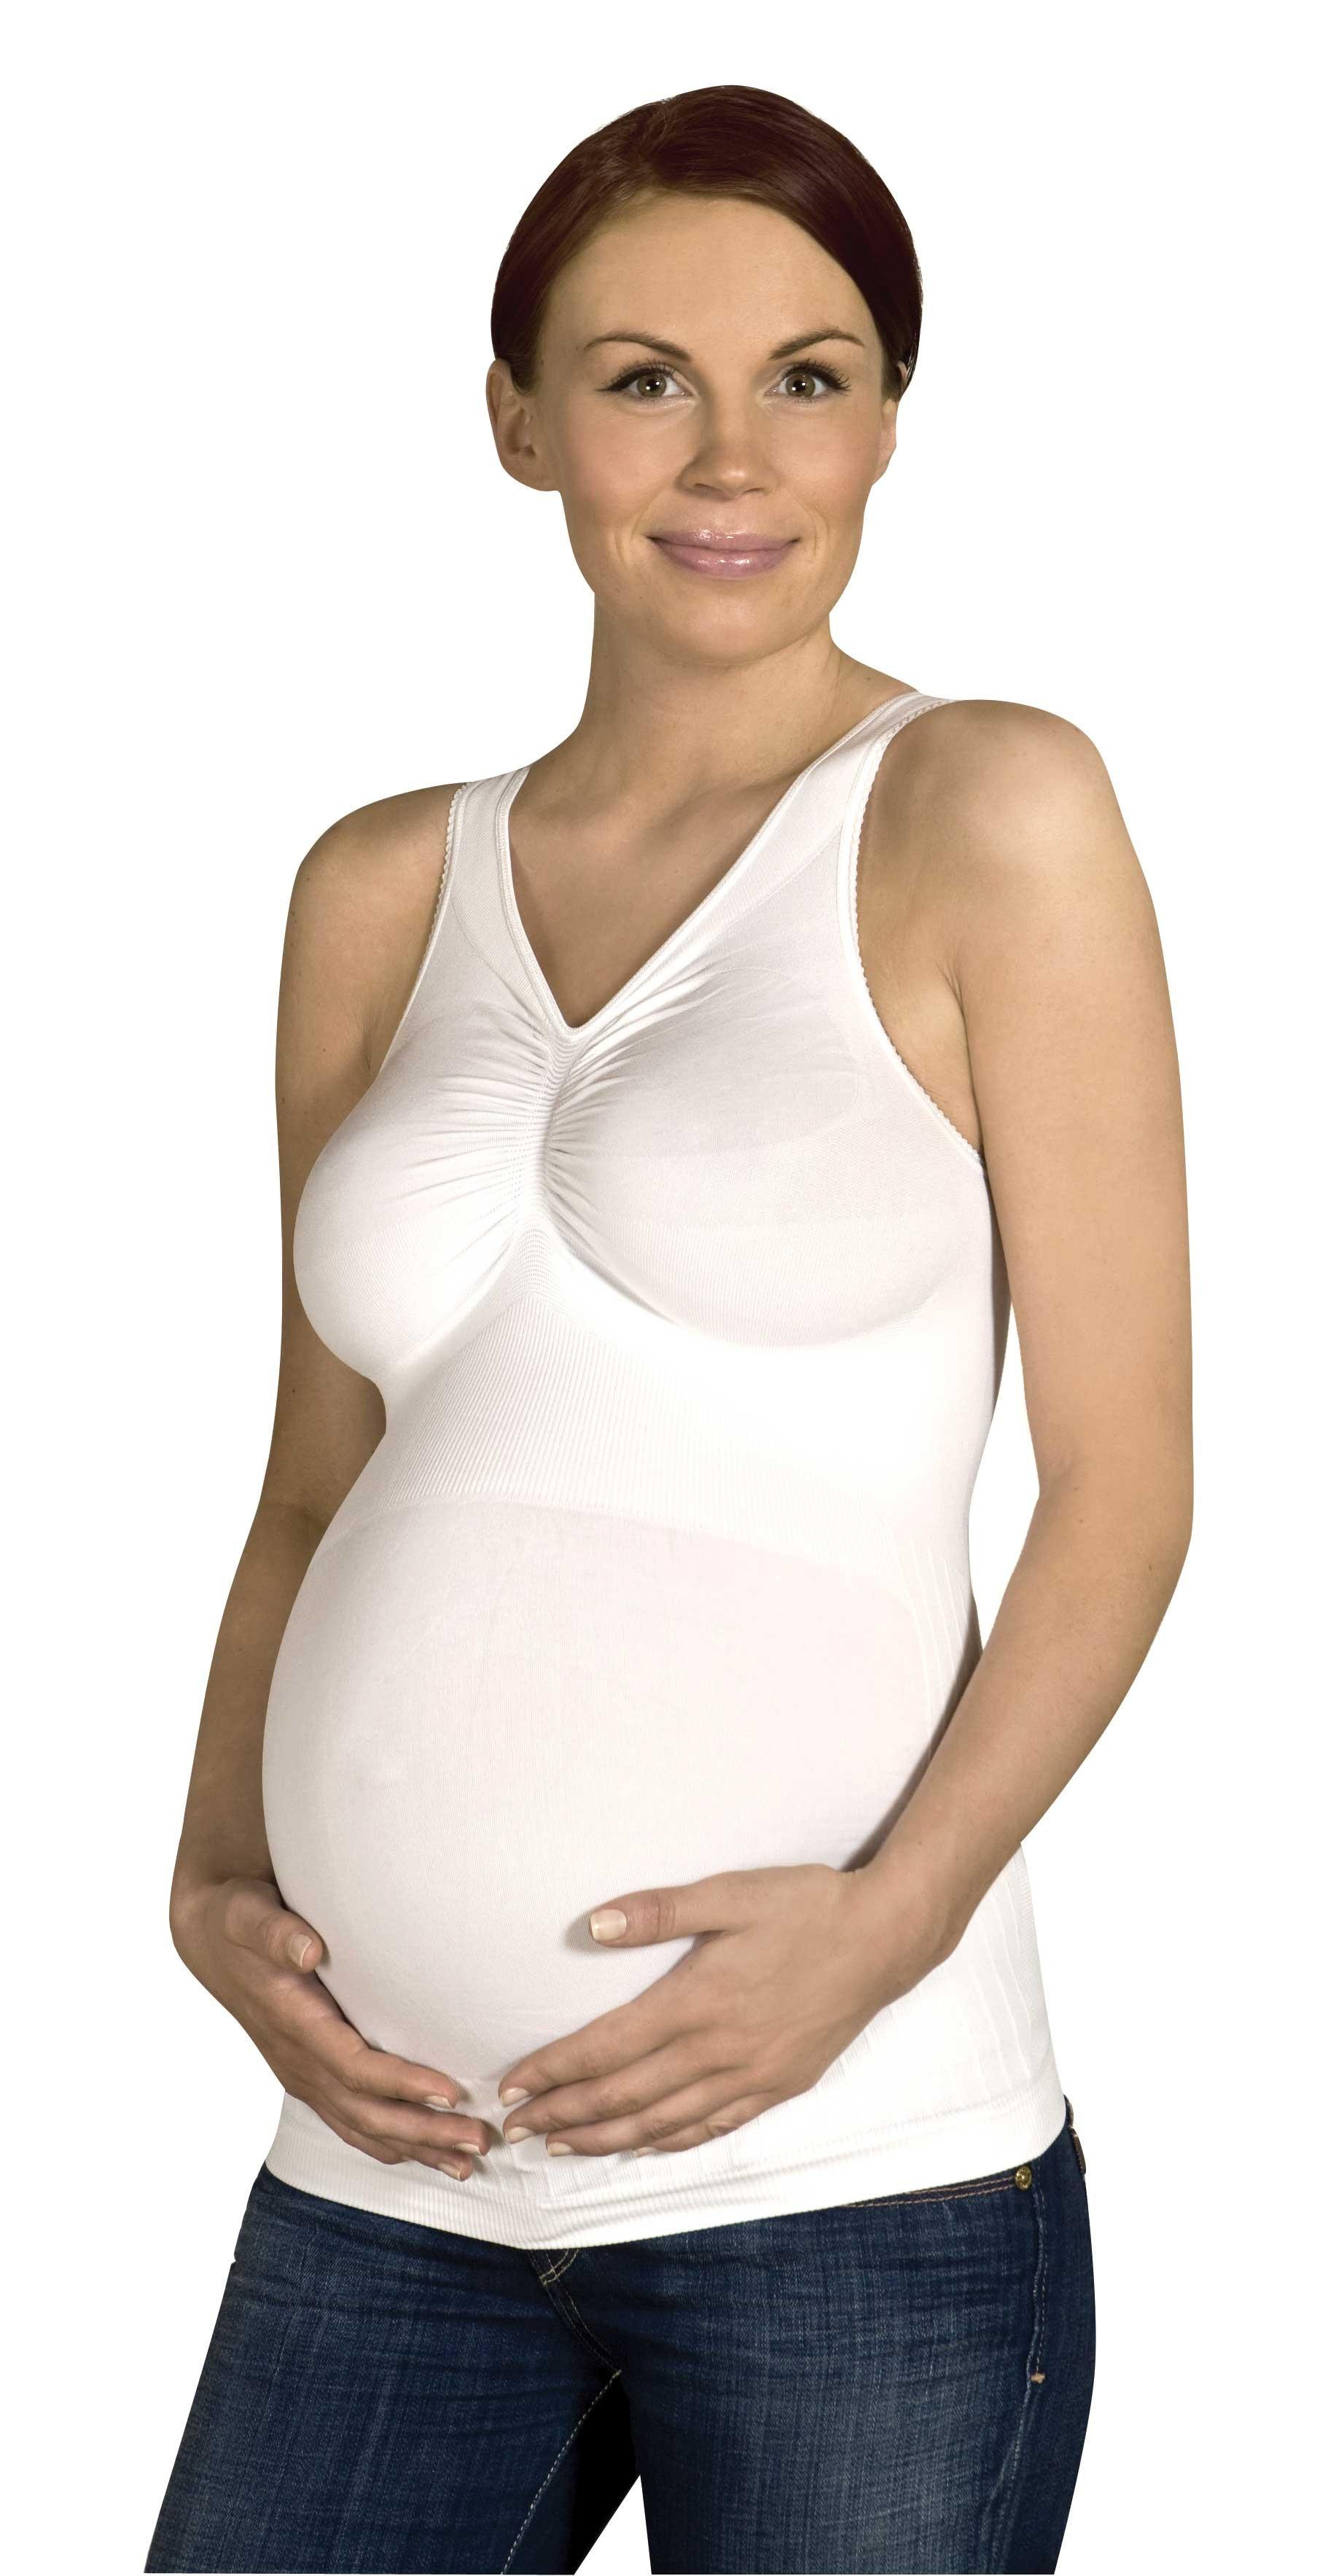 Carriwell light support vest for pregnancy Maternity support vest 